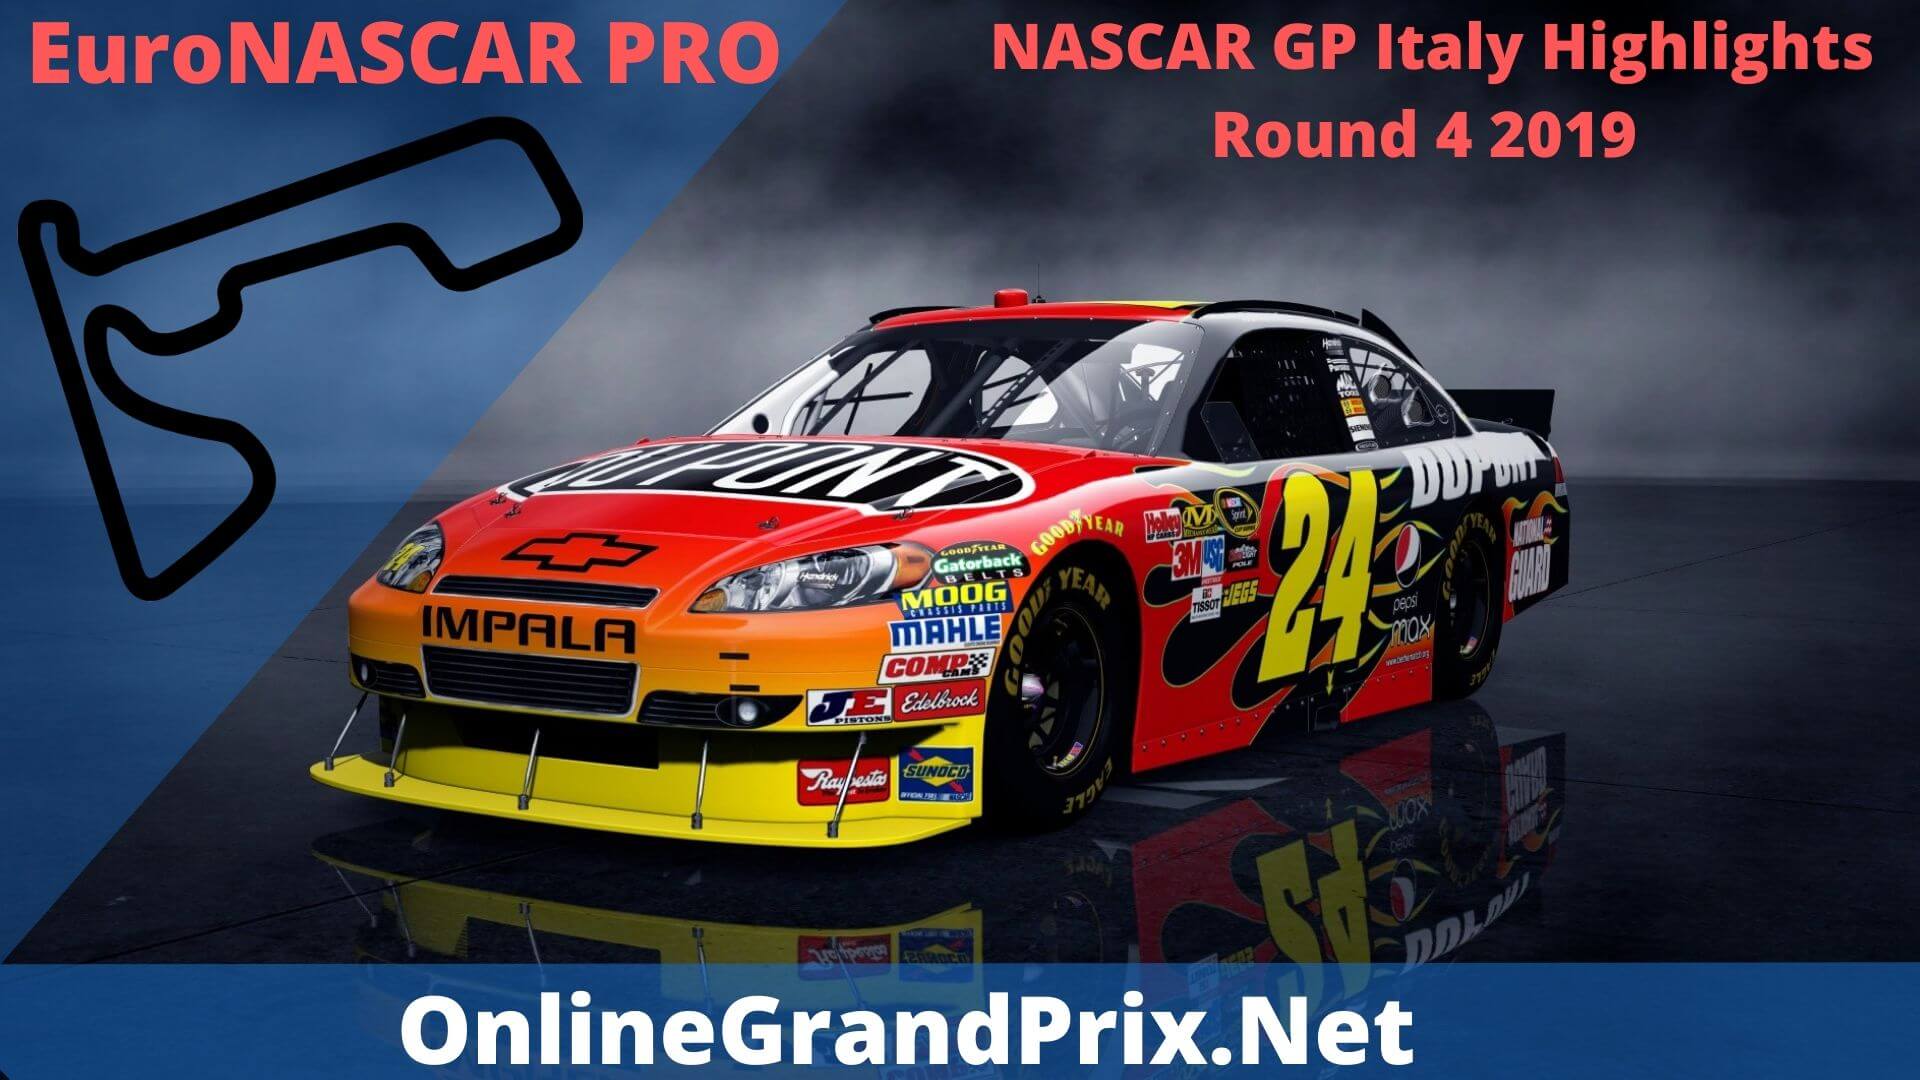 NASCAR GP Italy Round 4 Highlights 2019